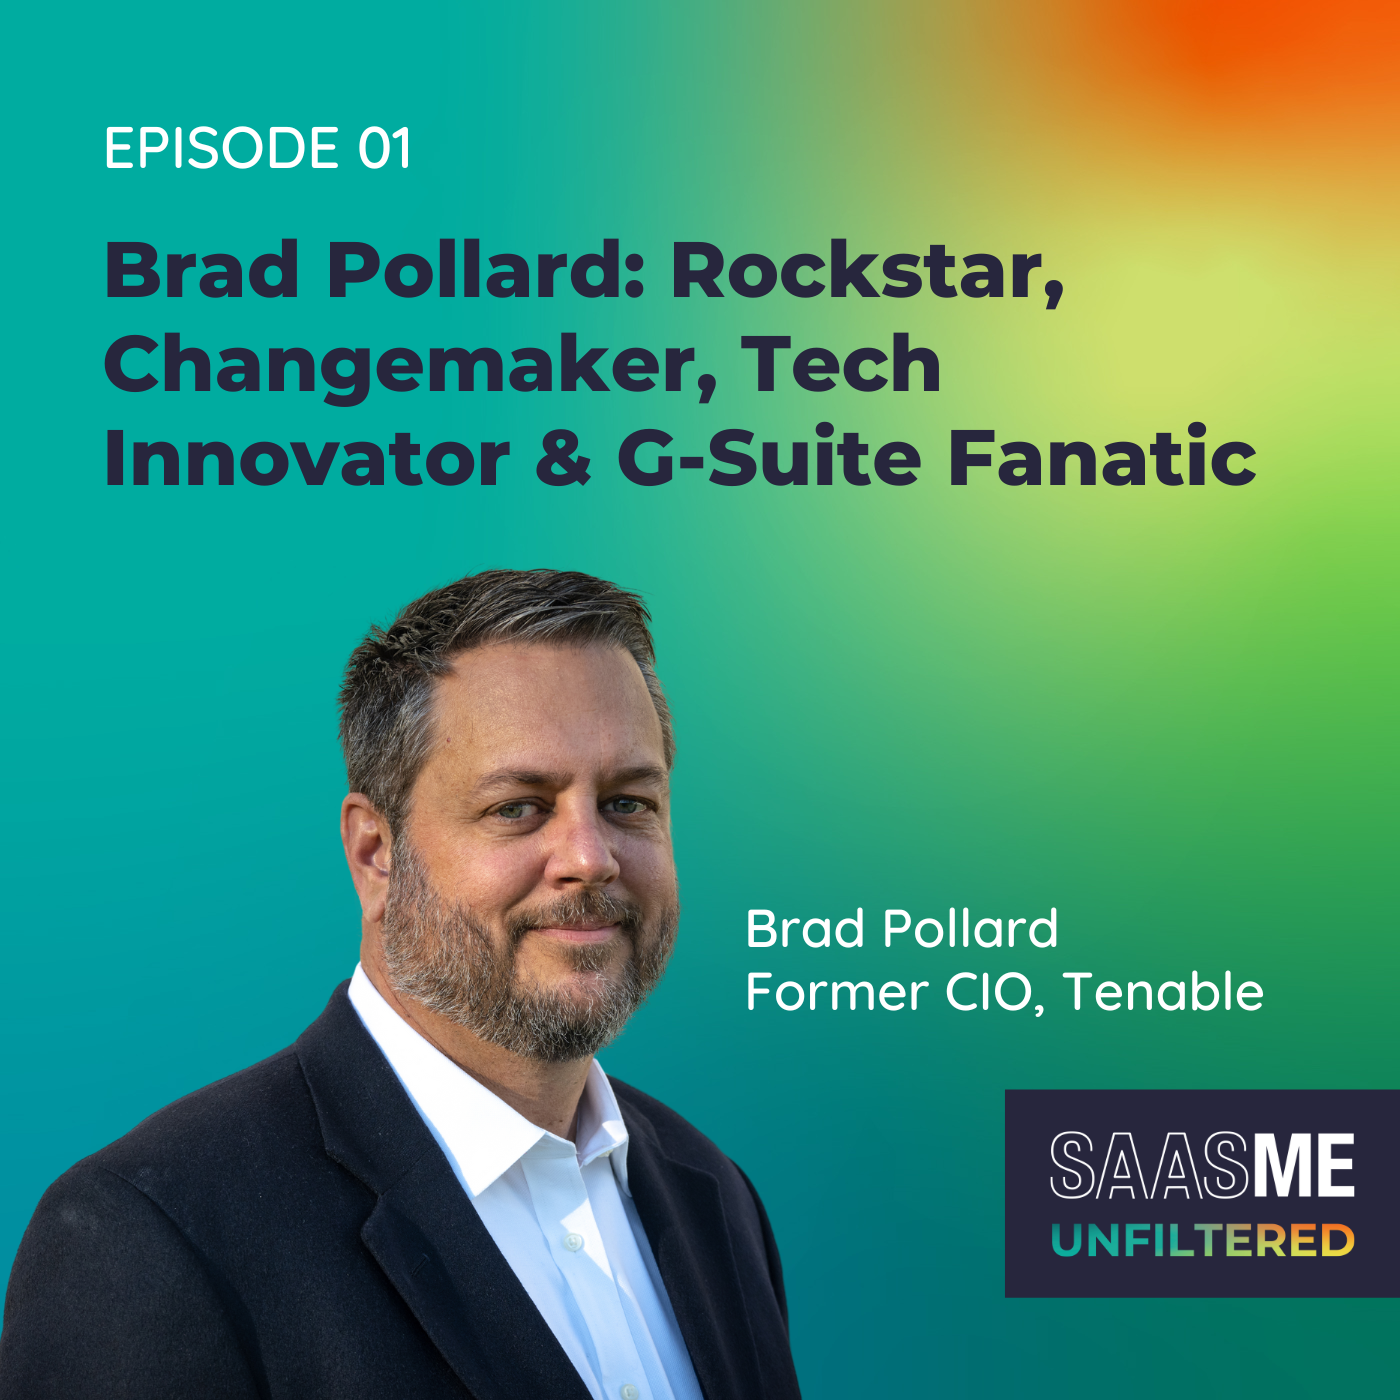 Brad Pollard: Rockstar, Changemaker, Tech Innovator & G-Suite Fanatic